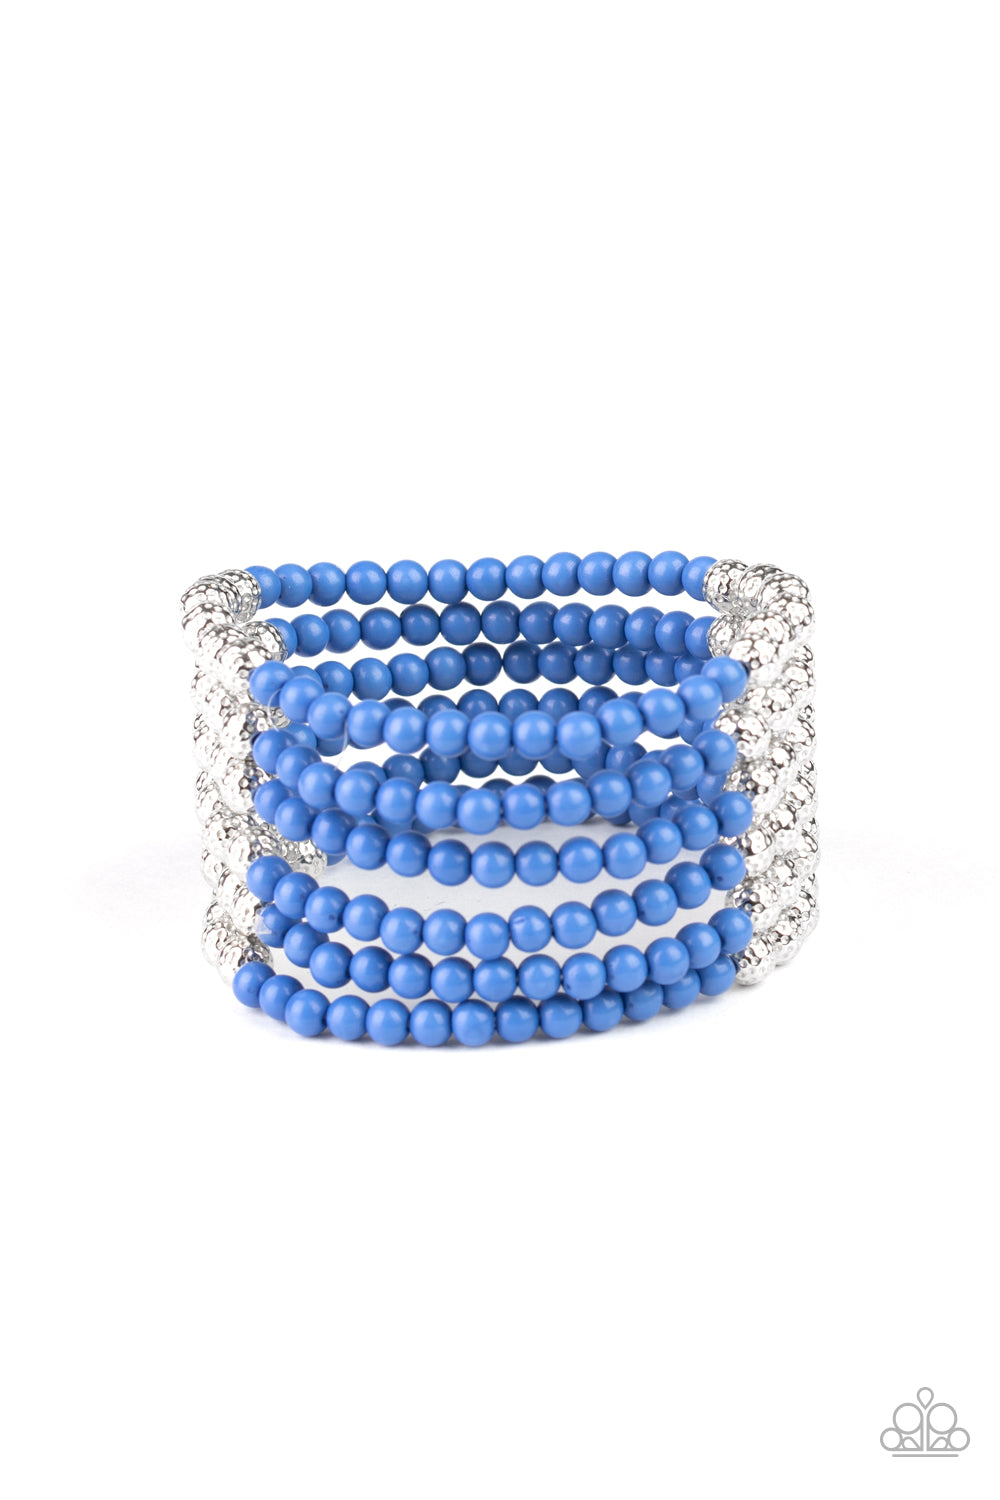 LAYER It On Thick Blue Bracelet - Paparazzi Accessories